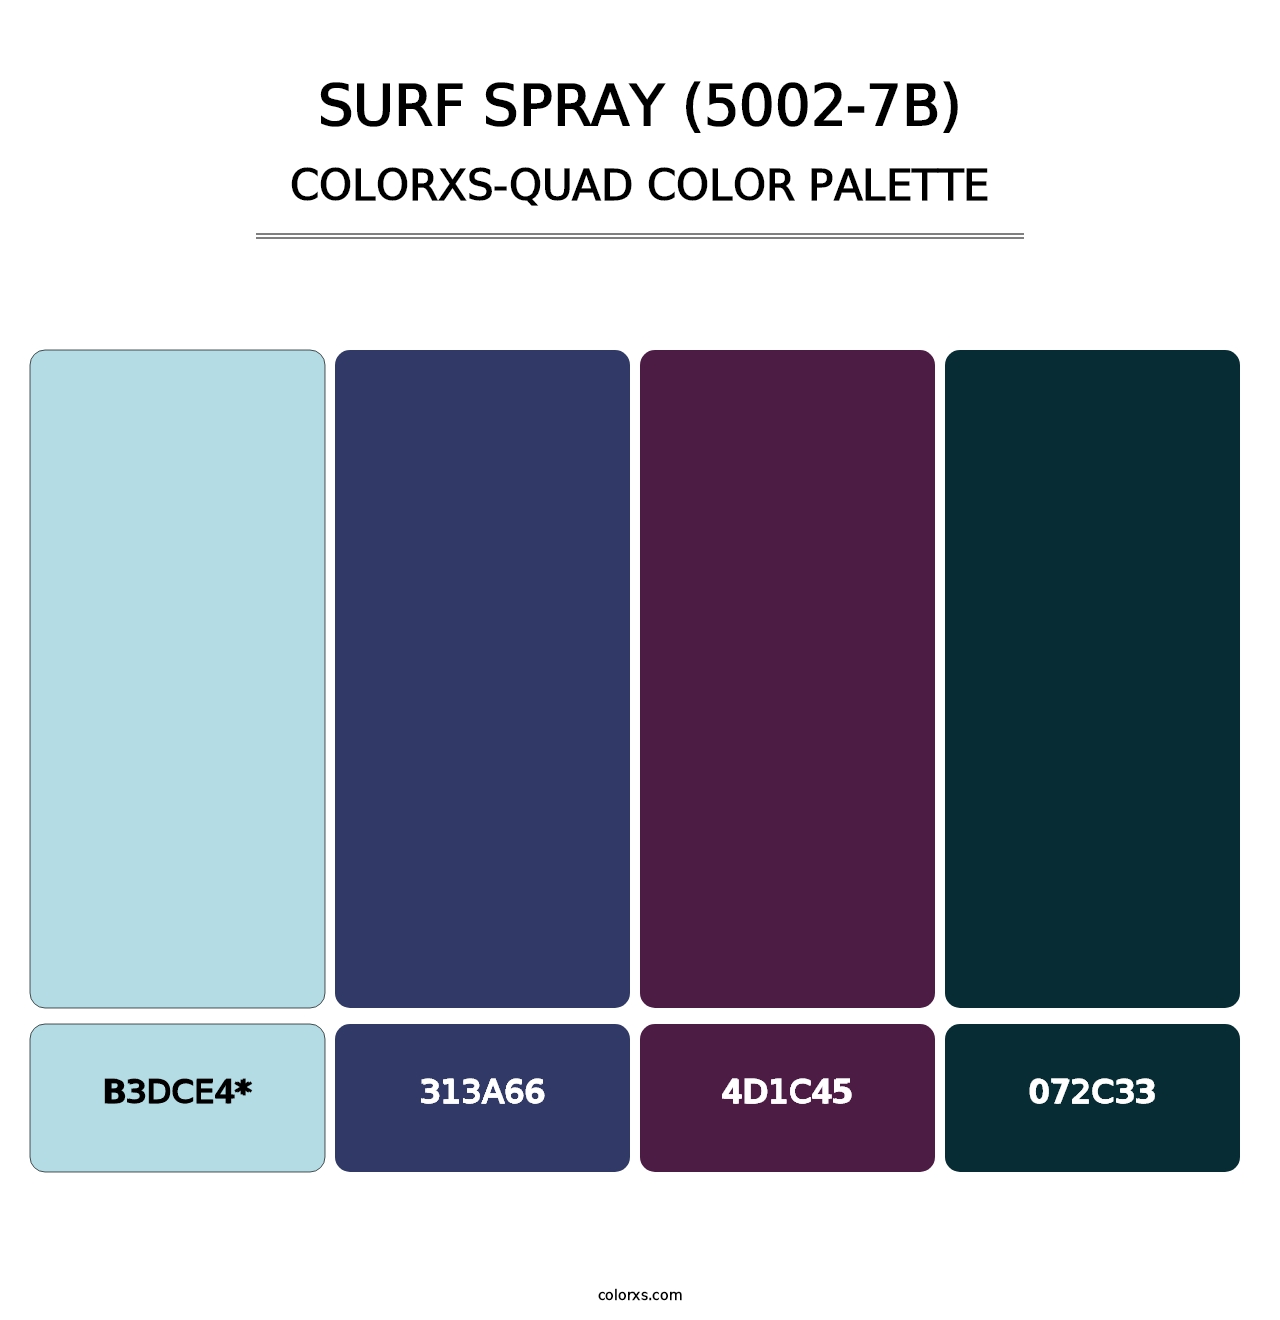 Surf Spray (5002-7B) - Colorxs Quad Palette